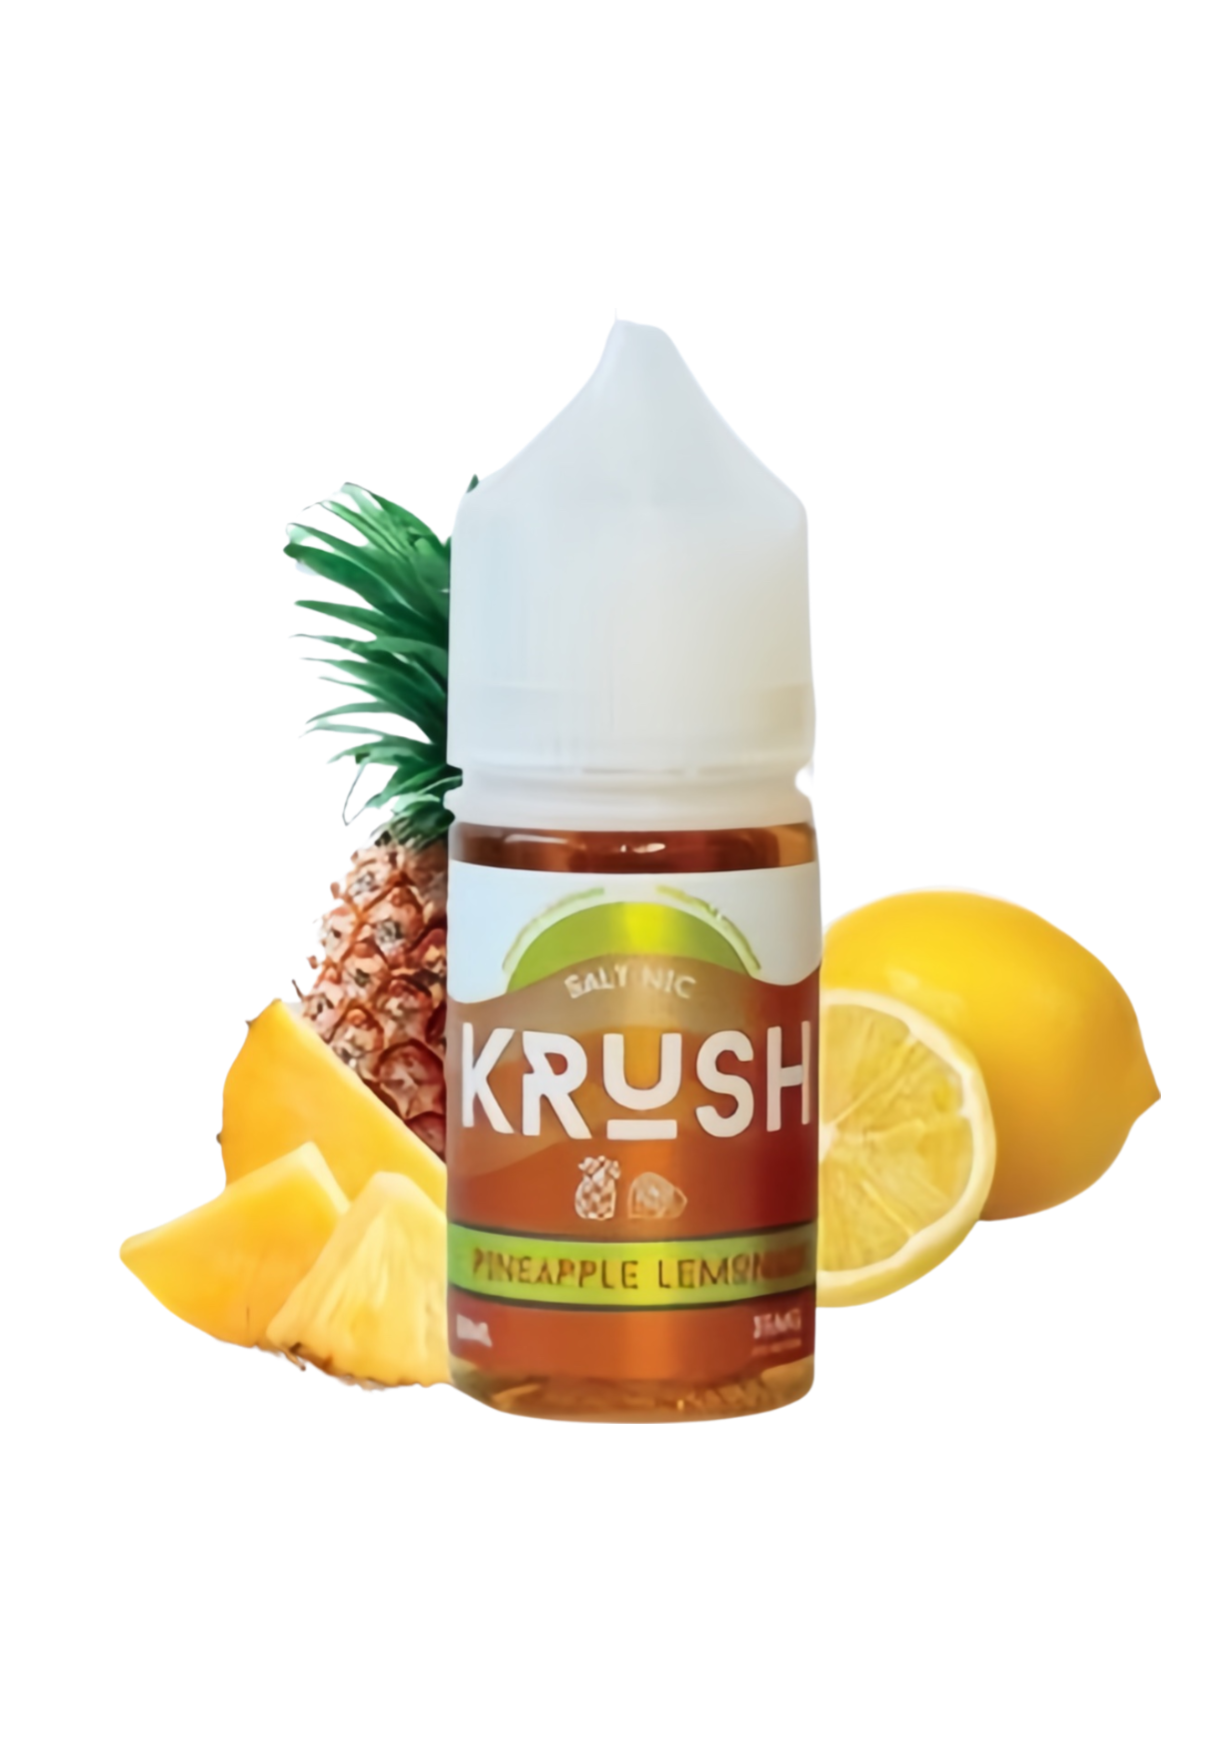 Krush Pineapple Lemonade - Nước Chanh Dứa